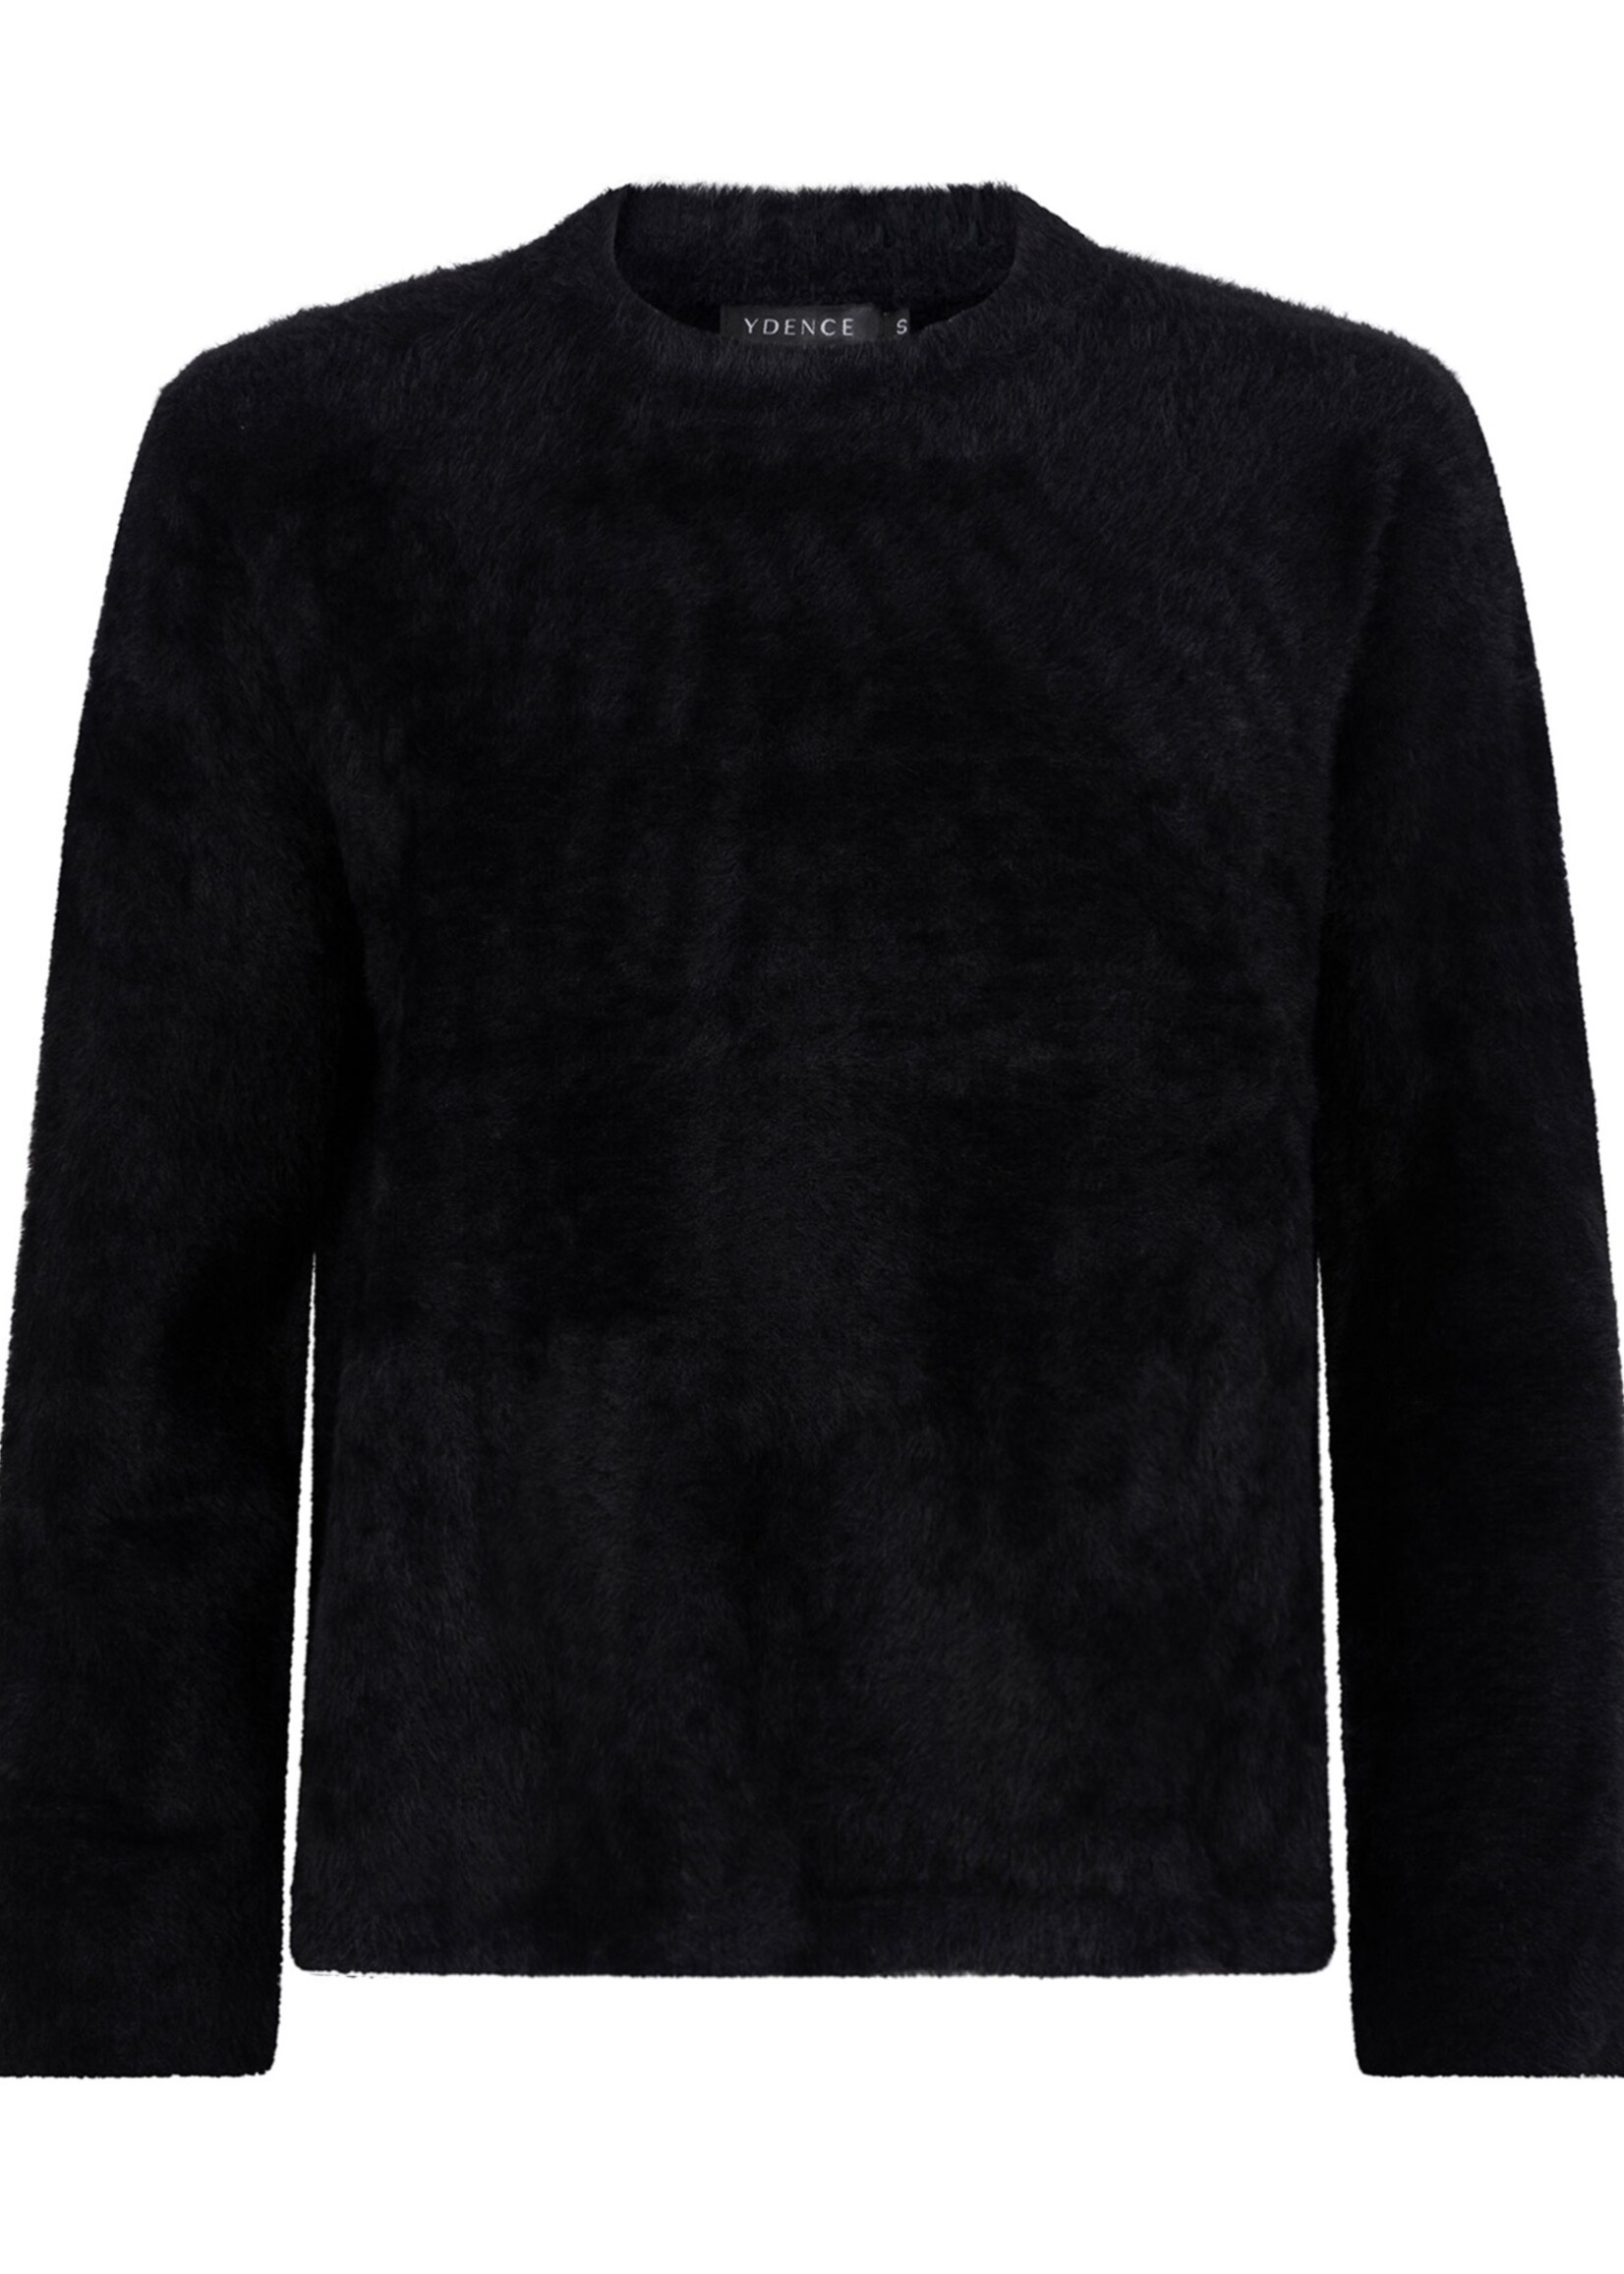 Ydence sweater Olivia Black